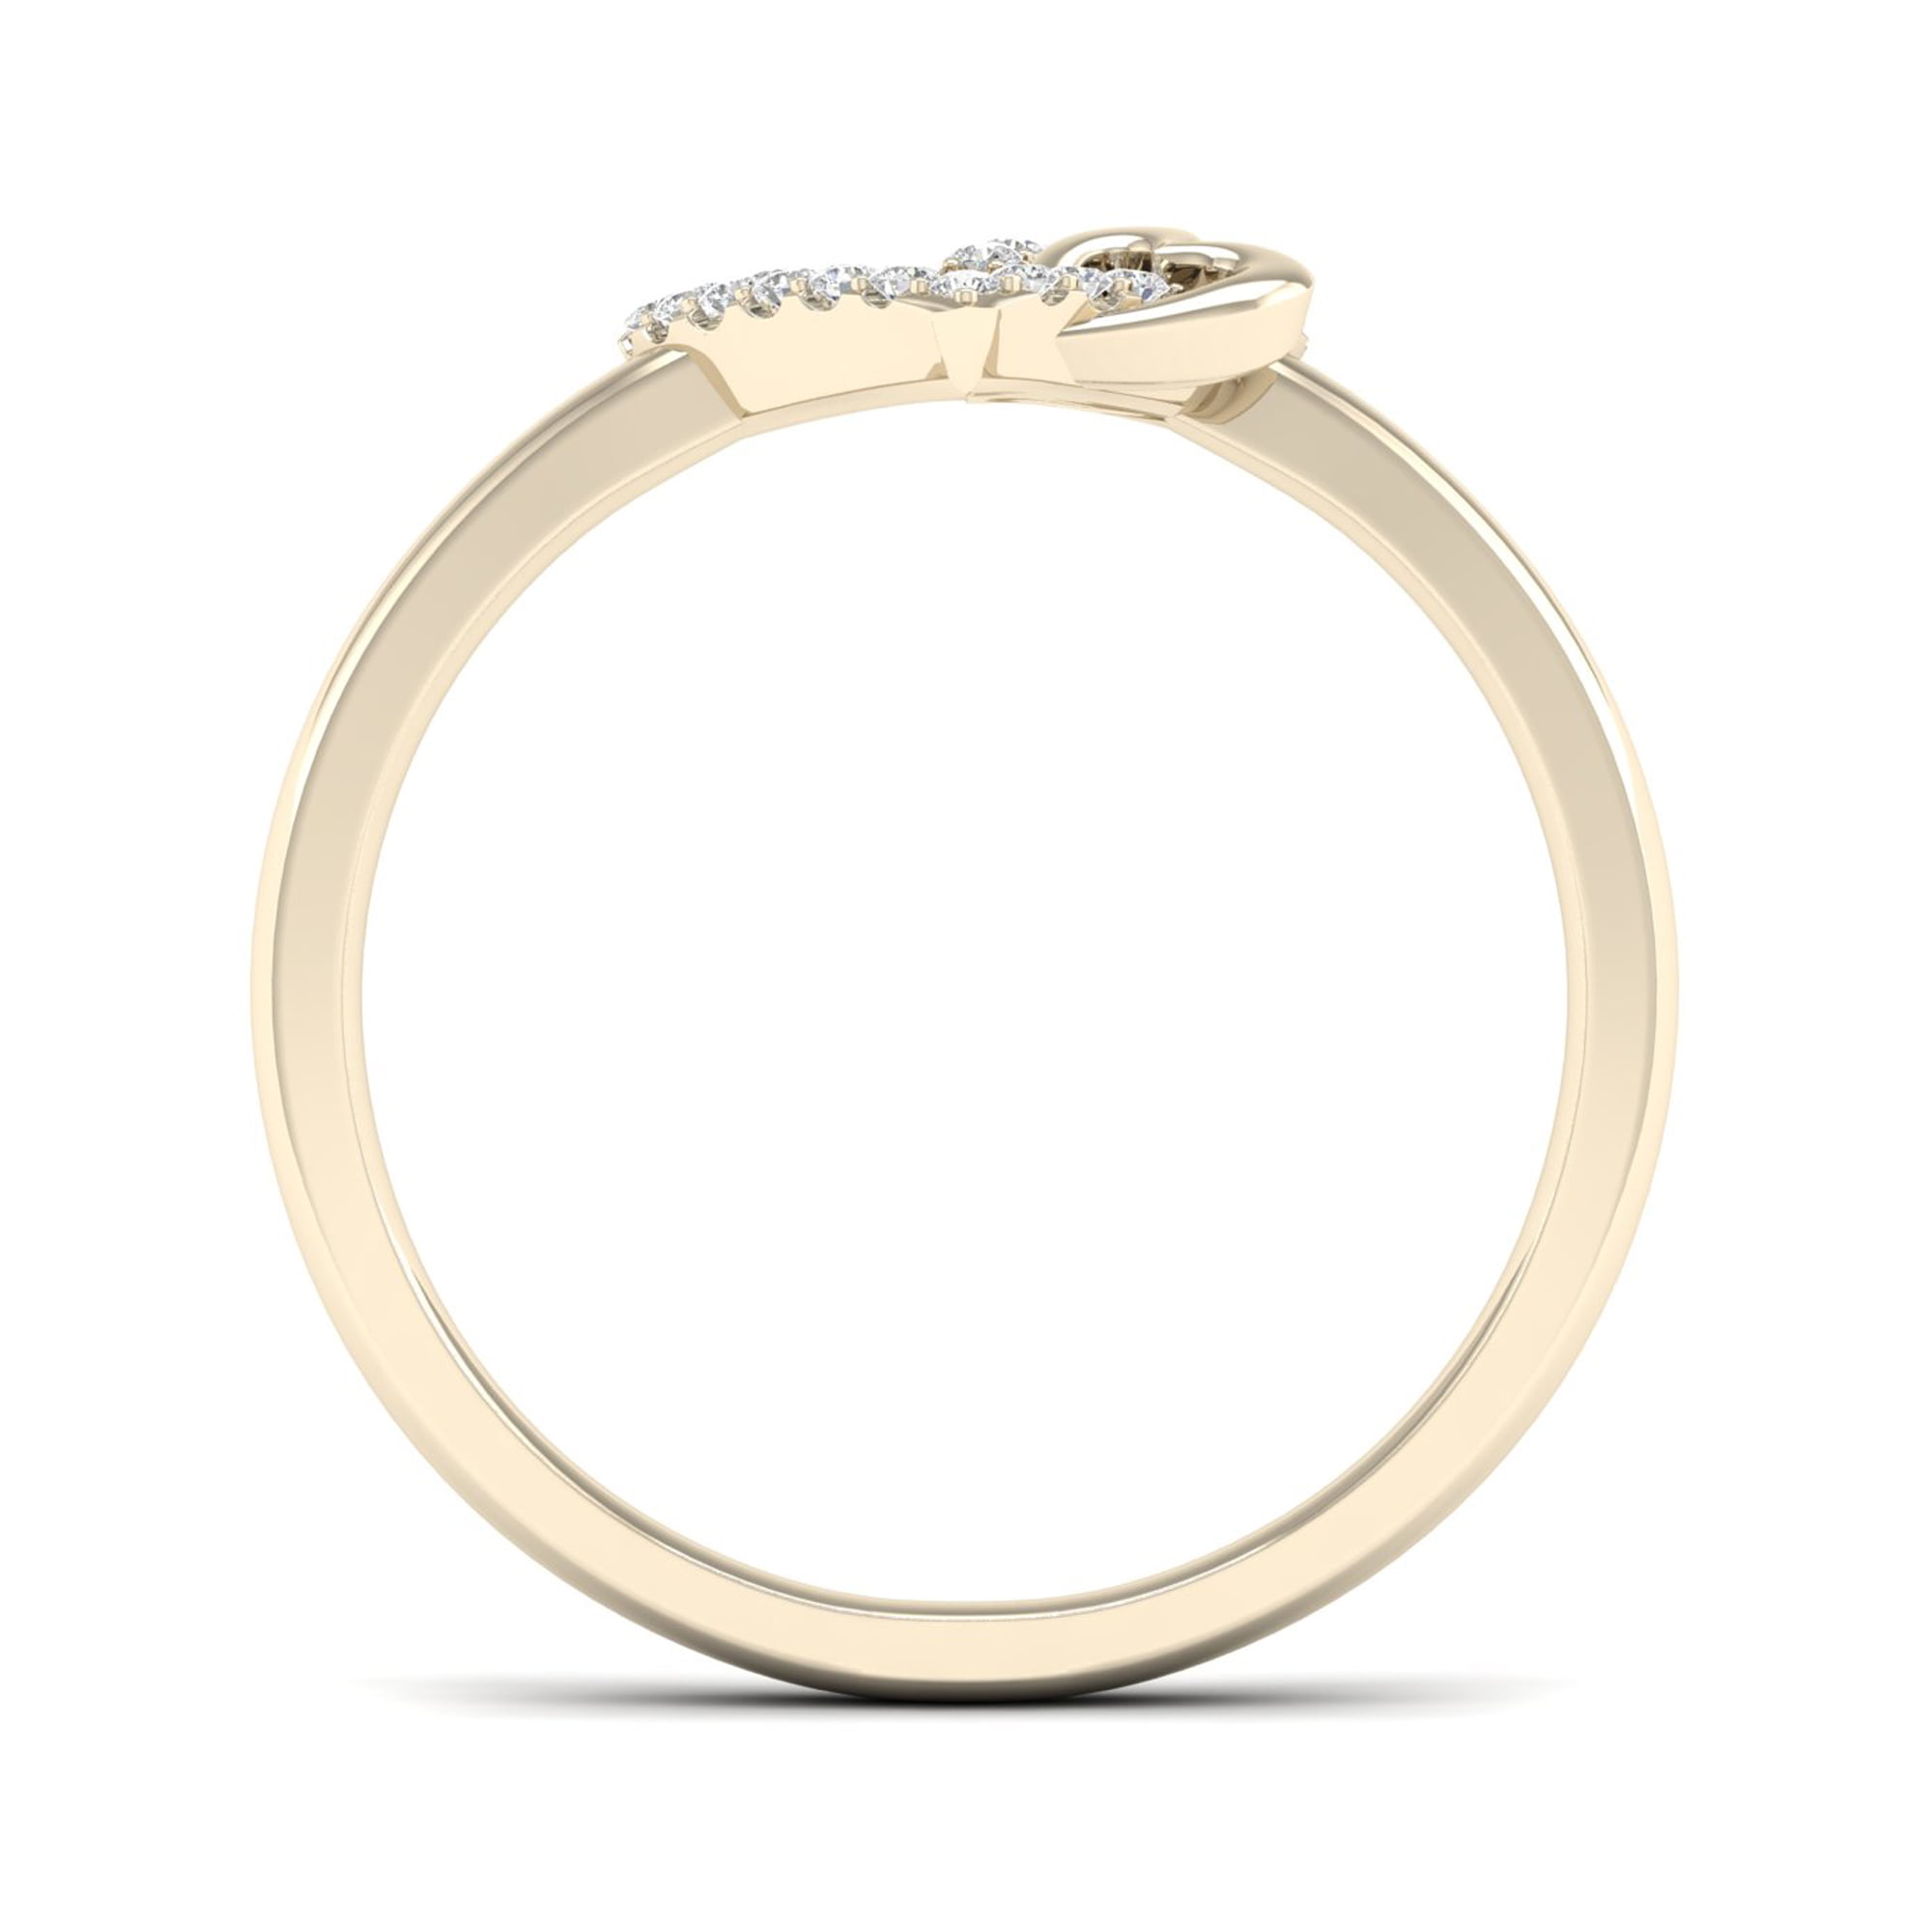 Buy Massiel Round Diamond Engagement Ring Online